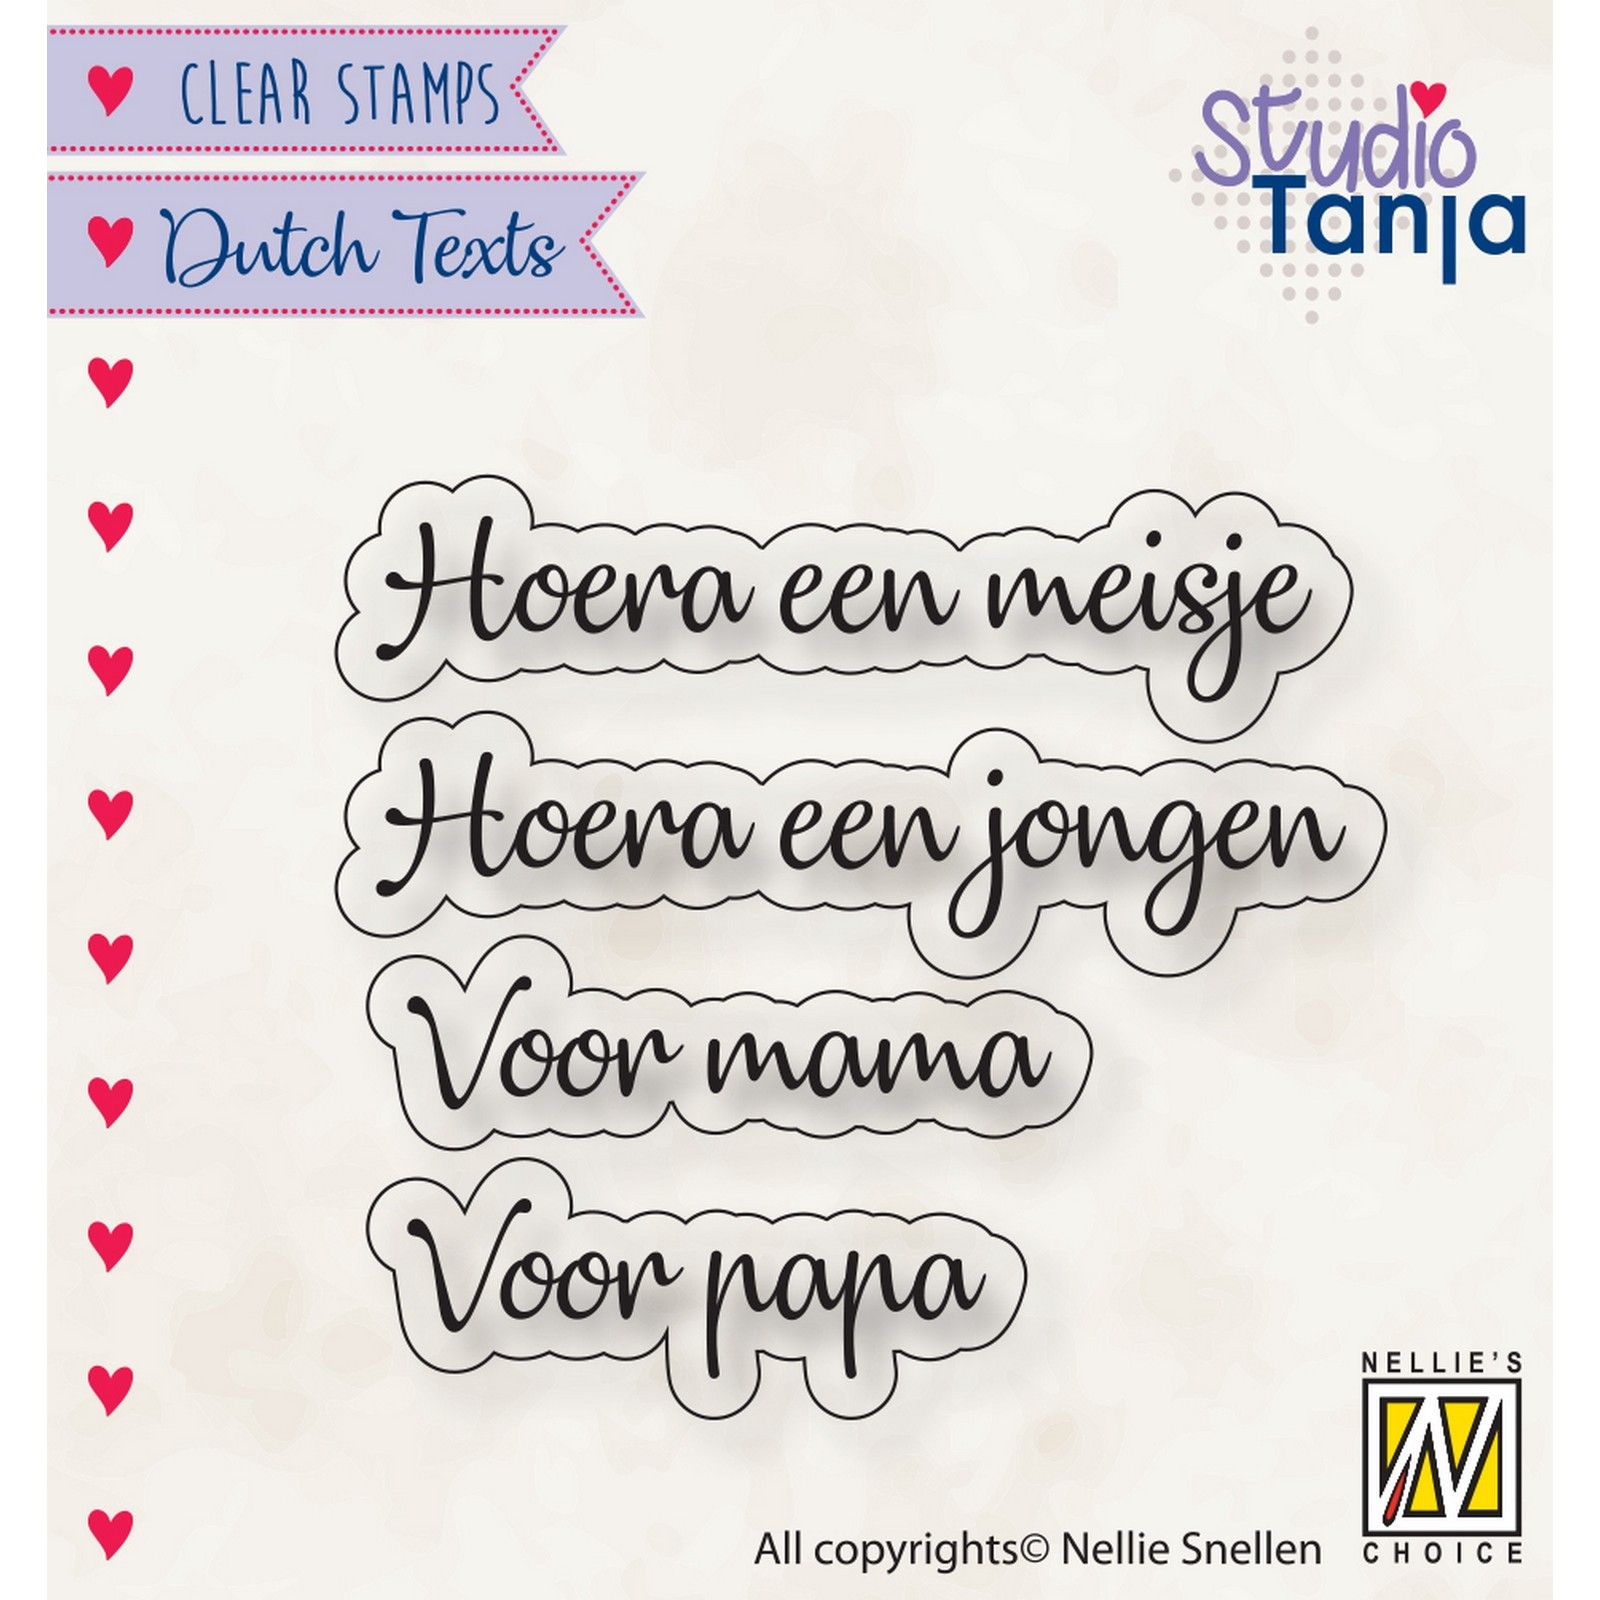 Nellie's Choice • Clear Stamps Dutch Texts Hoera Een Meisje Etc…